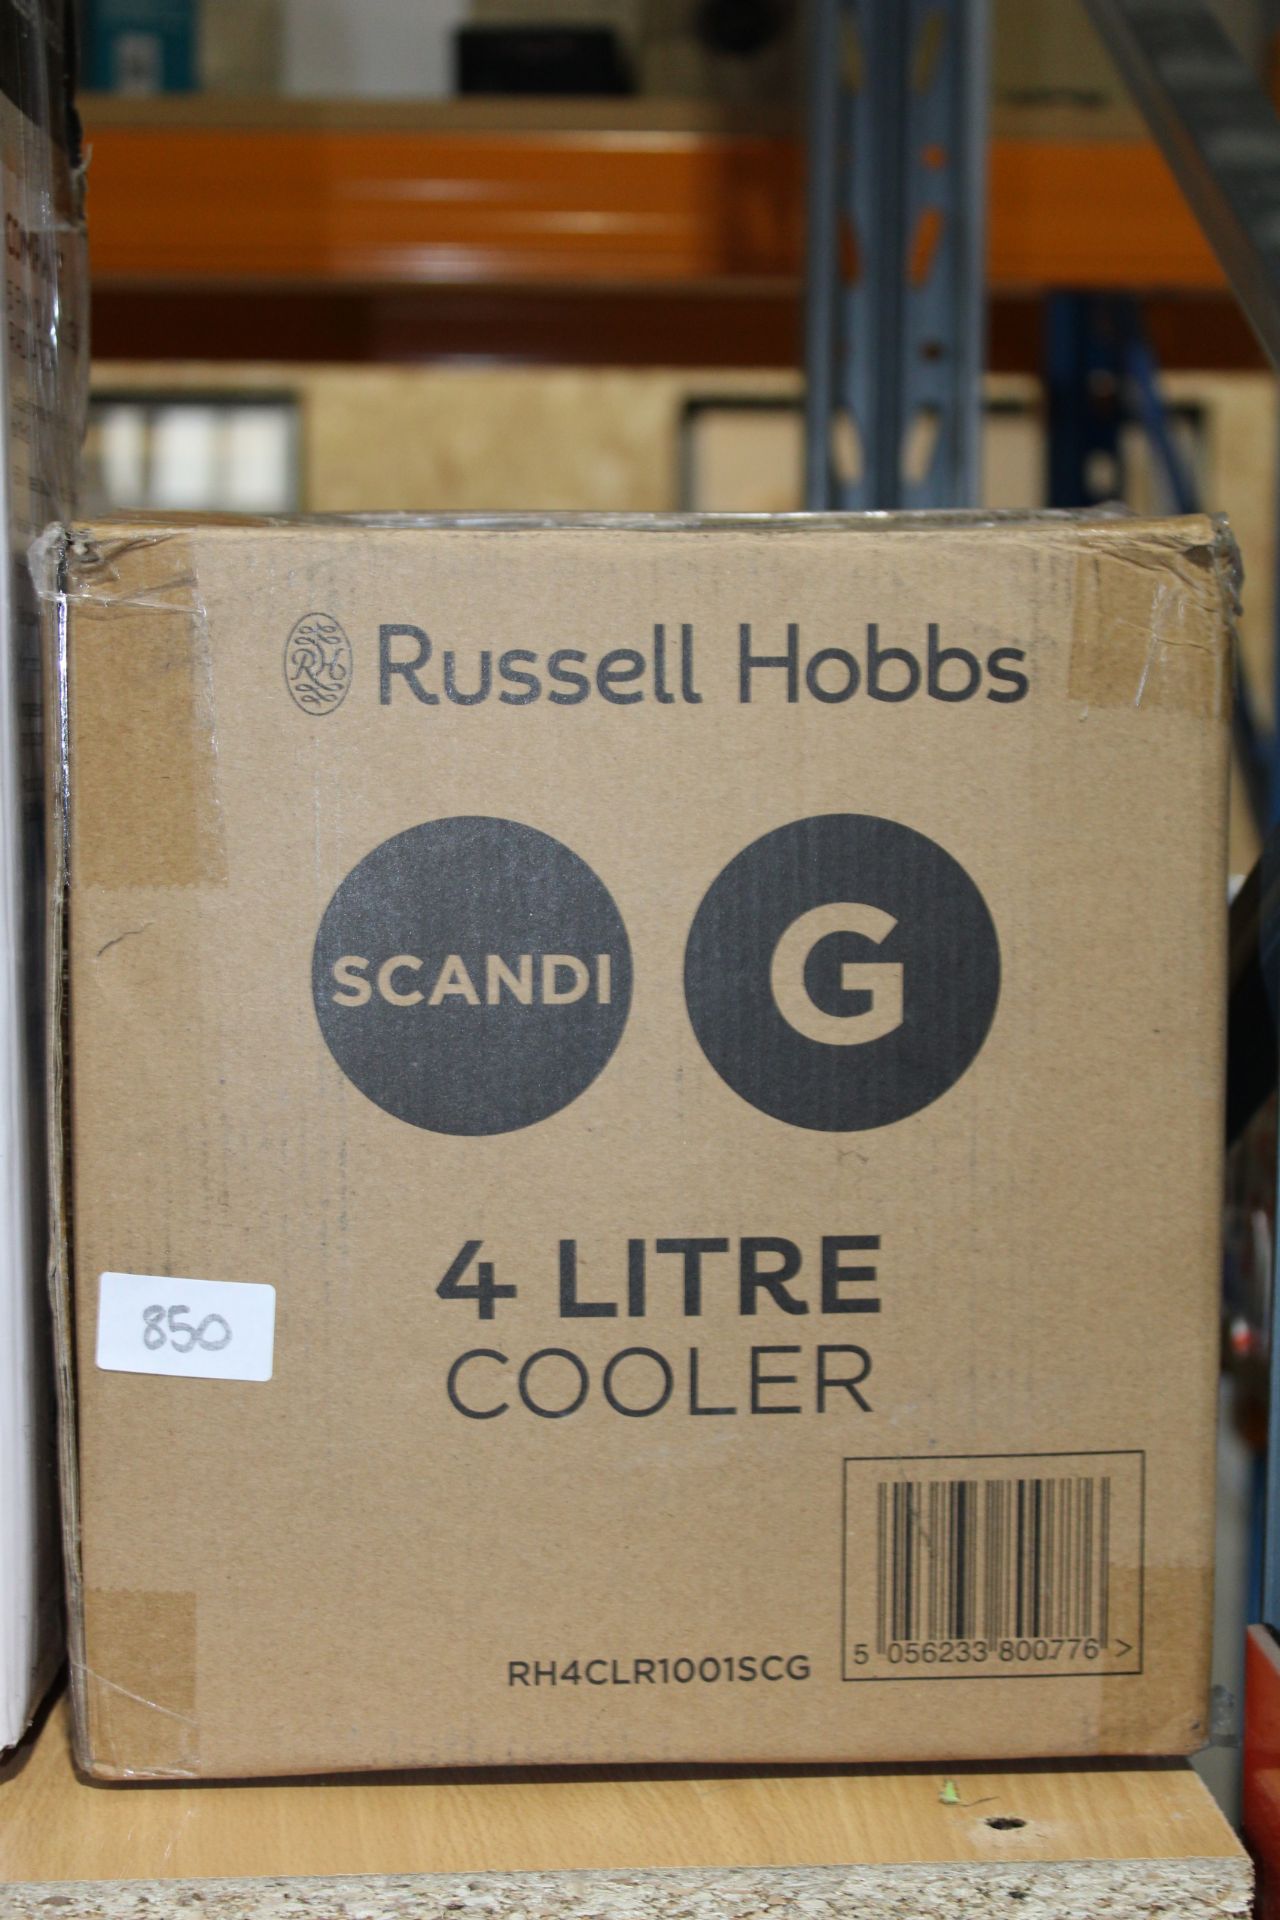 BOXED RUSSELL HOBBS SCANDI G 4 LITRE COOLER MODEL: RH4CLR1001SCG RRP £29.99